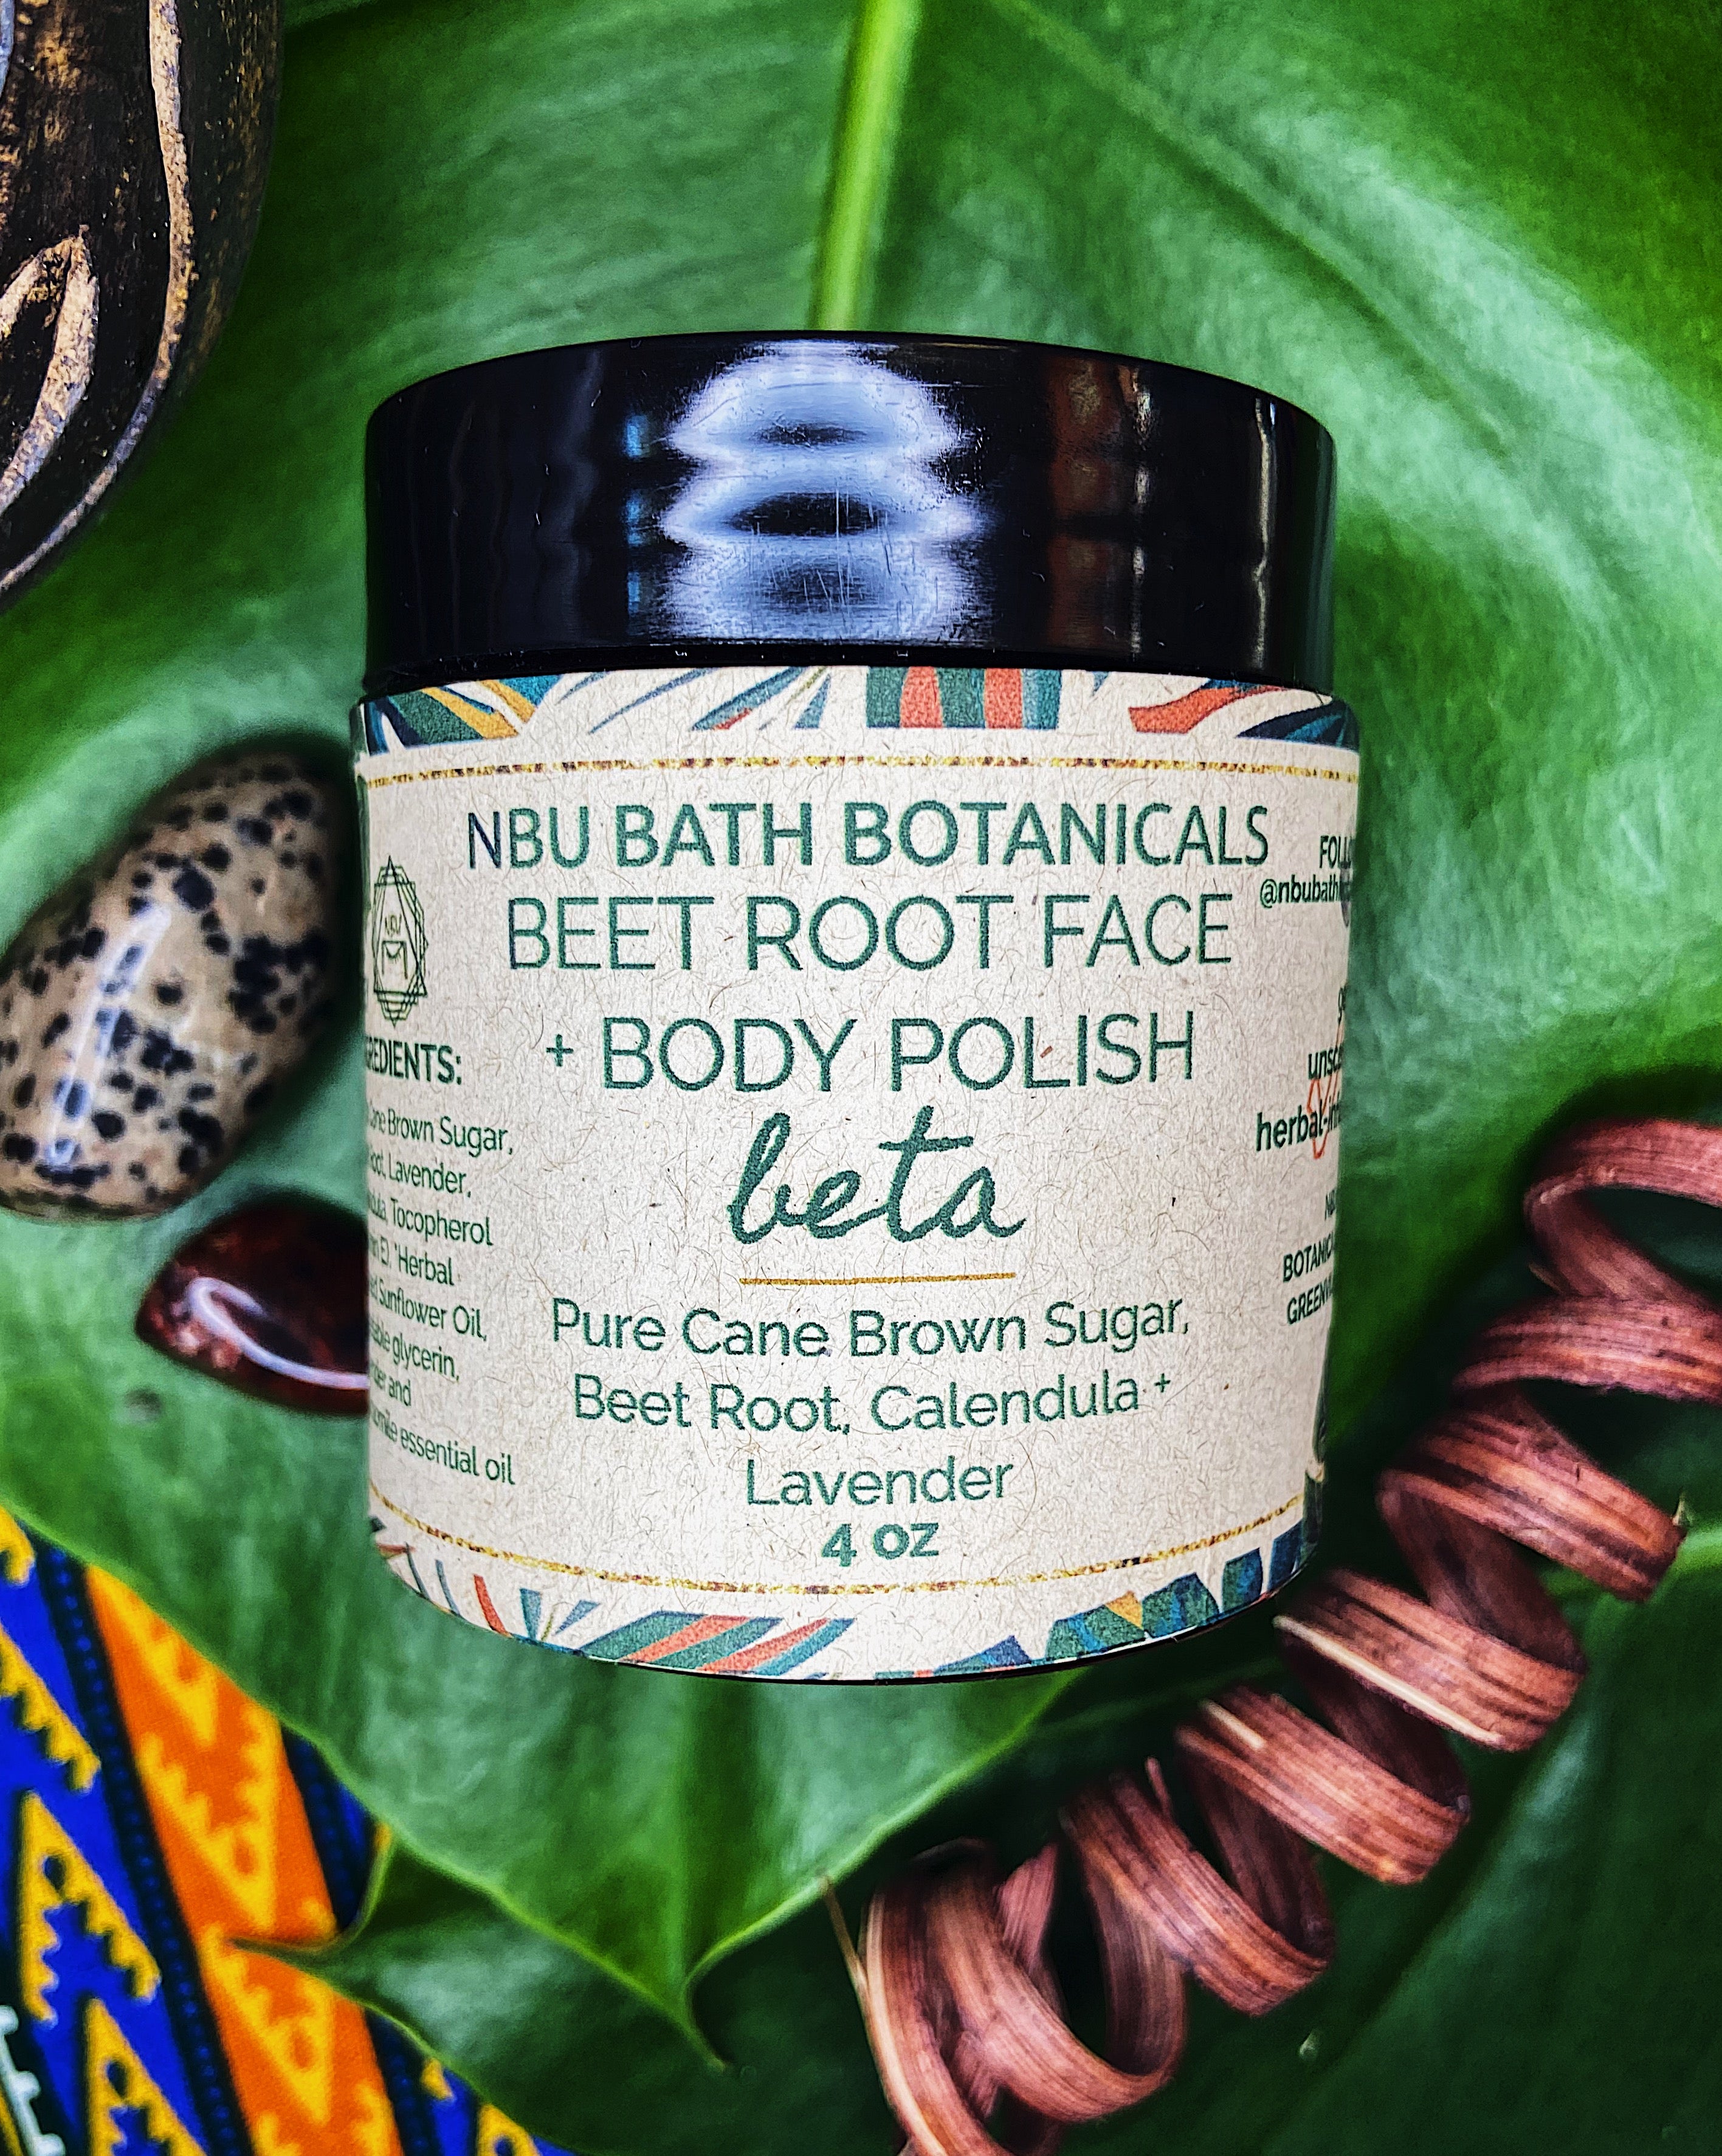 Beet Root Face • Body Polish BETA